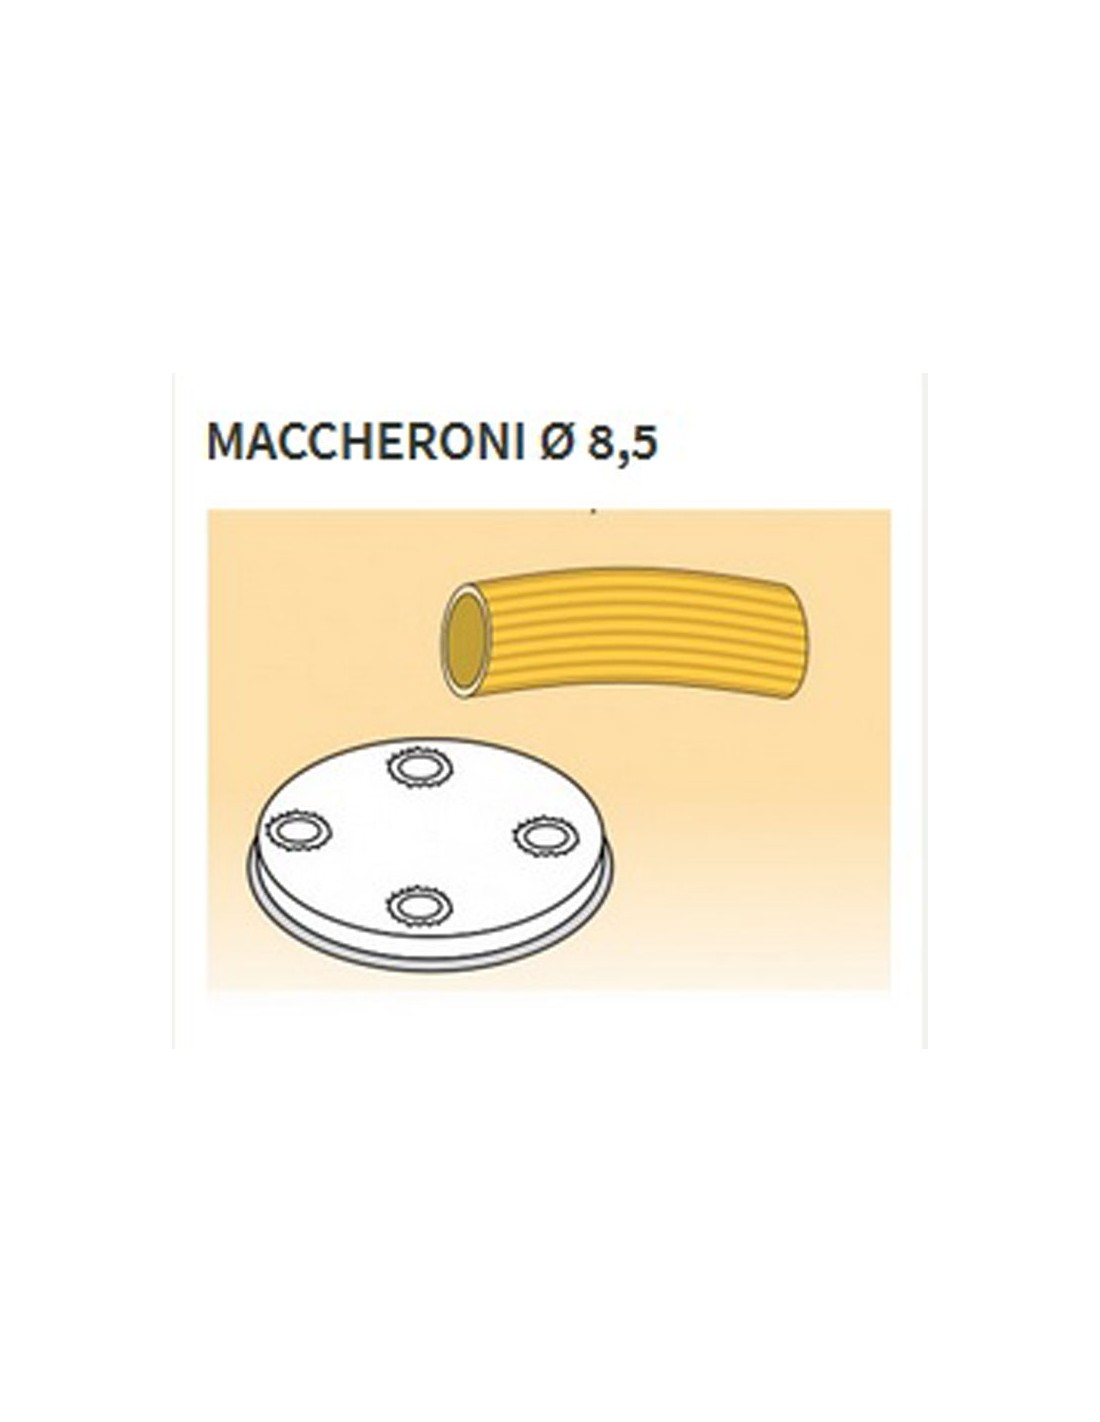 Macchina per pasta fresca MPF8N - Planet Chef Foodservice Equipment